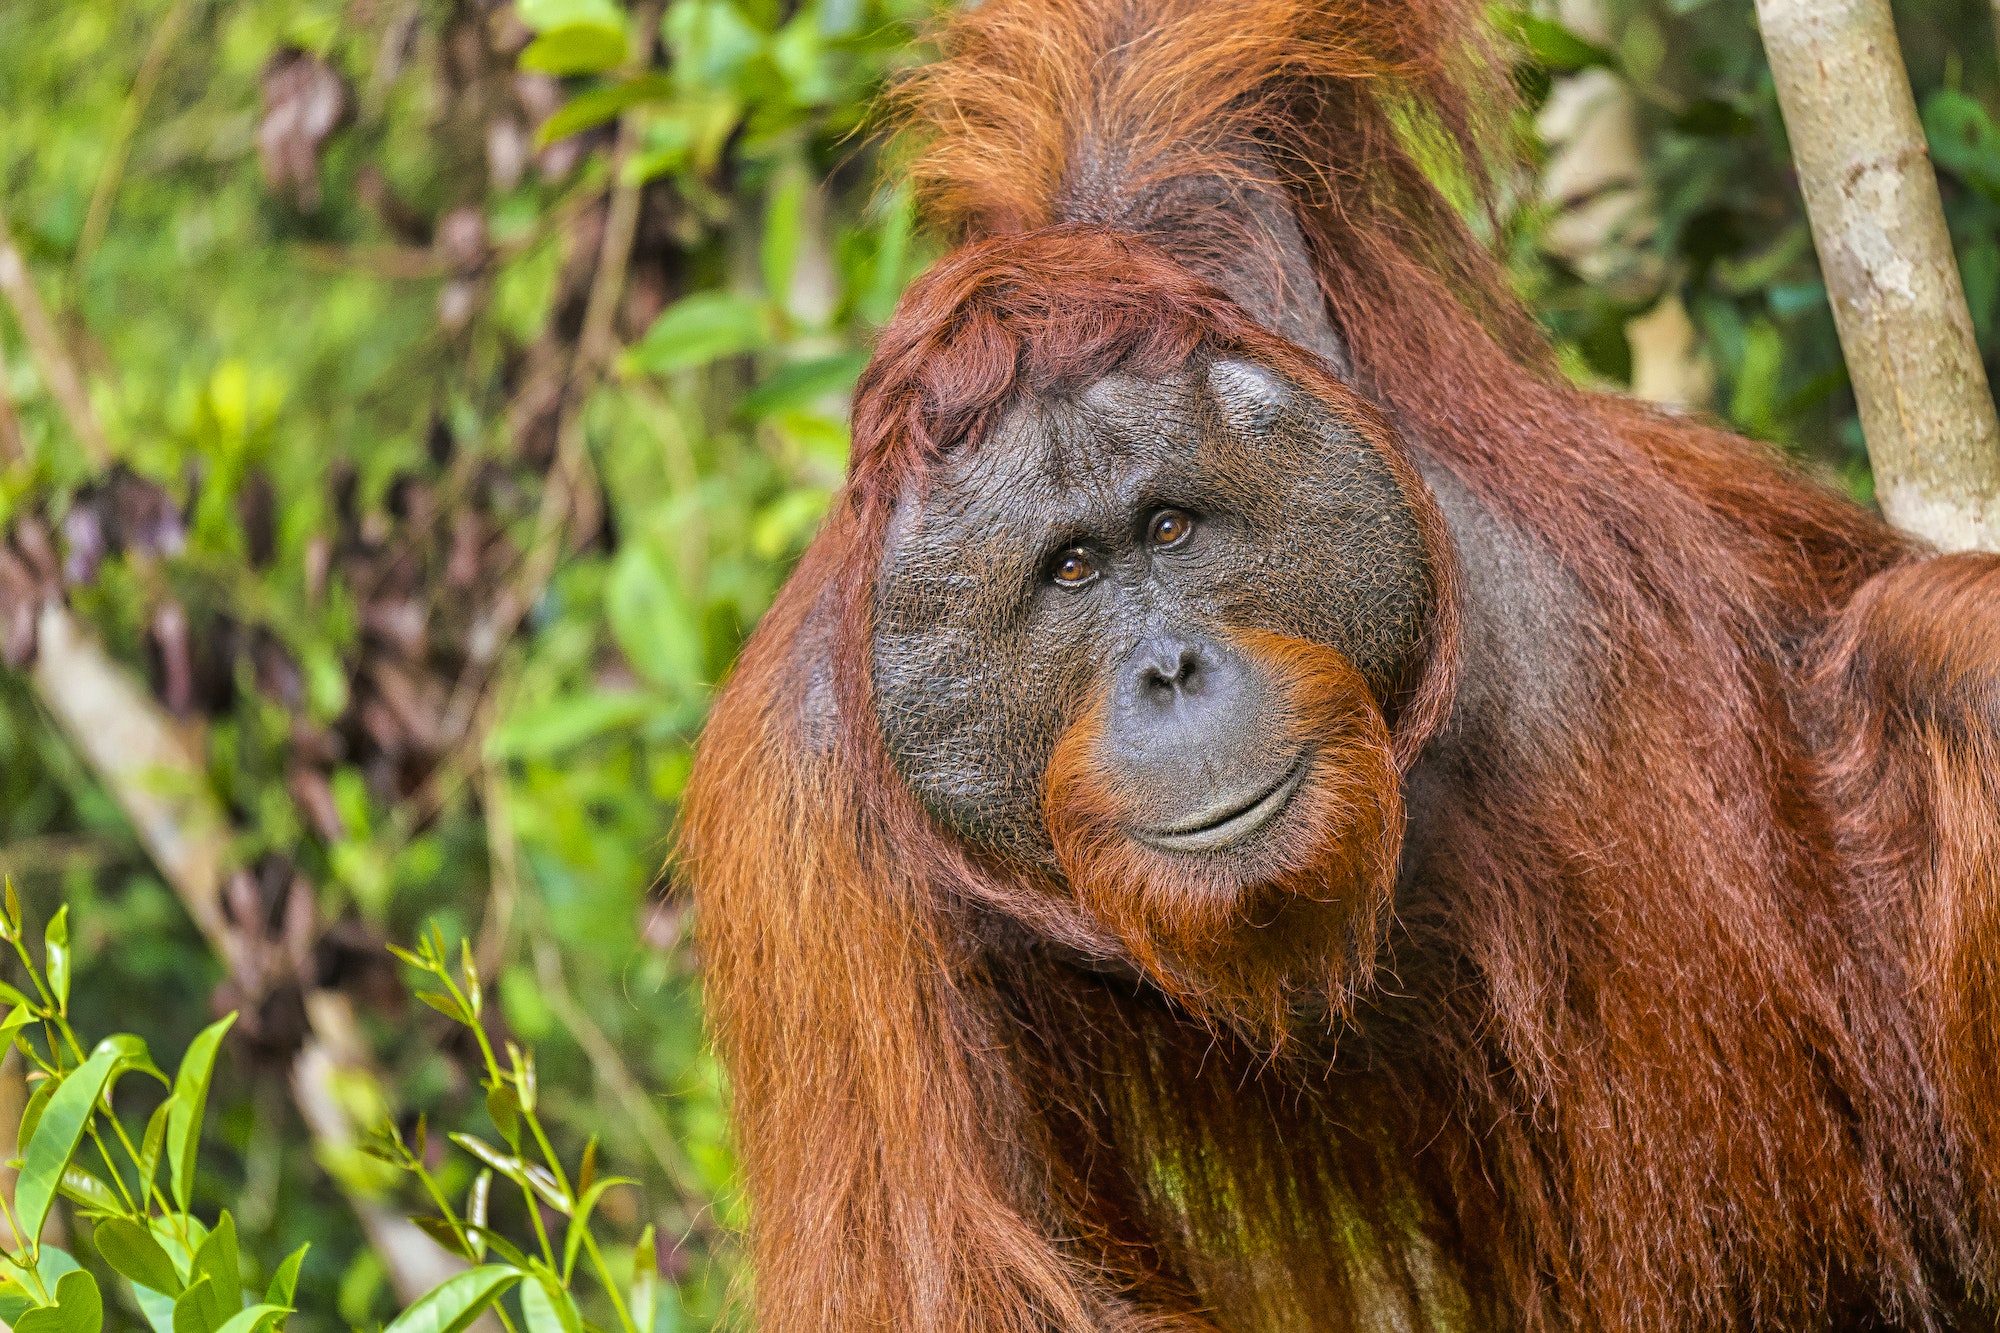 Orangutan, Tanjung Puting National Park, Indonesia